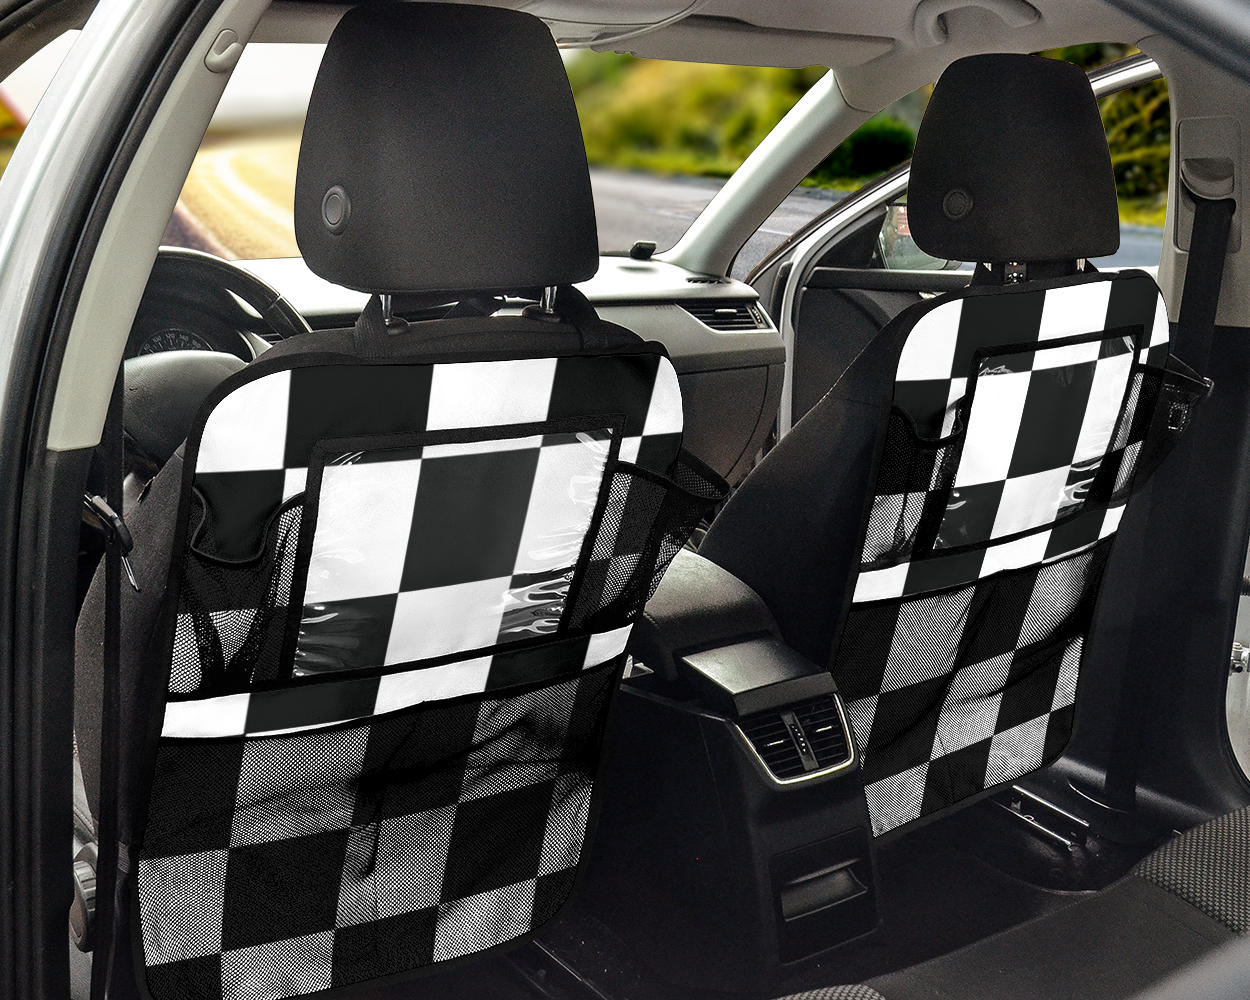 Racing Checkered Car Back Seat Organizer